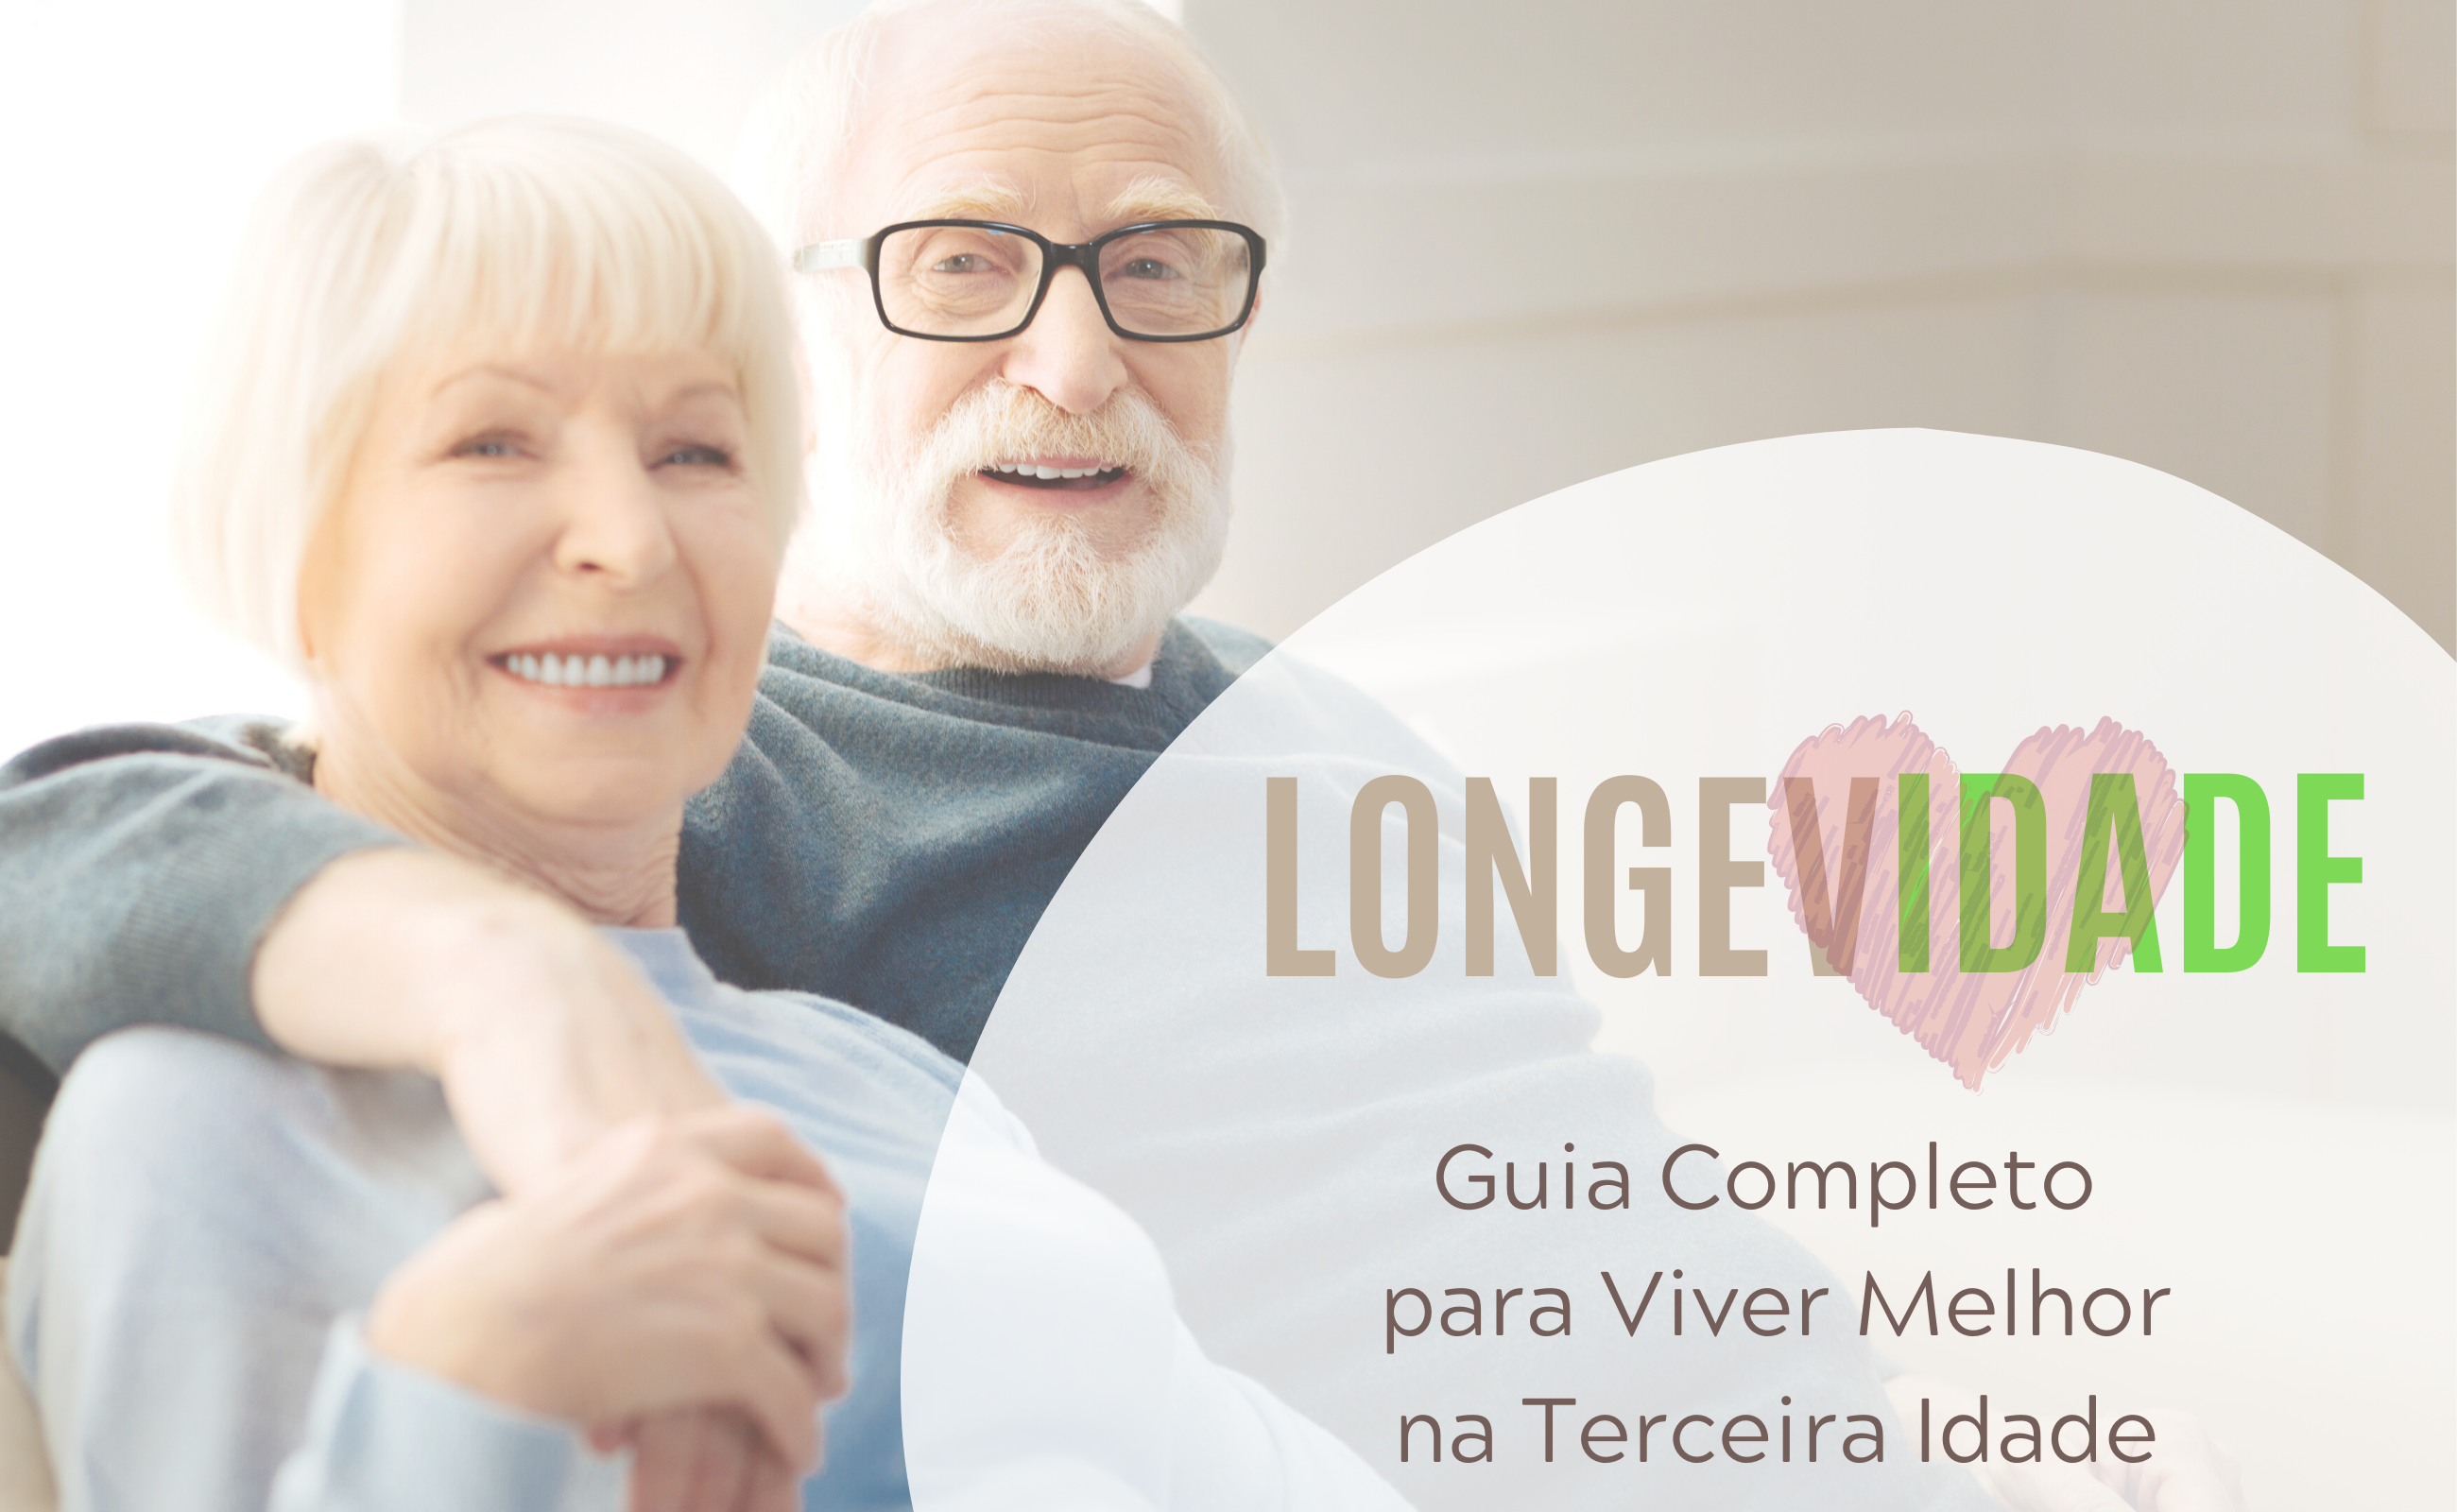 Longevidade e-book